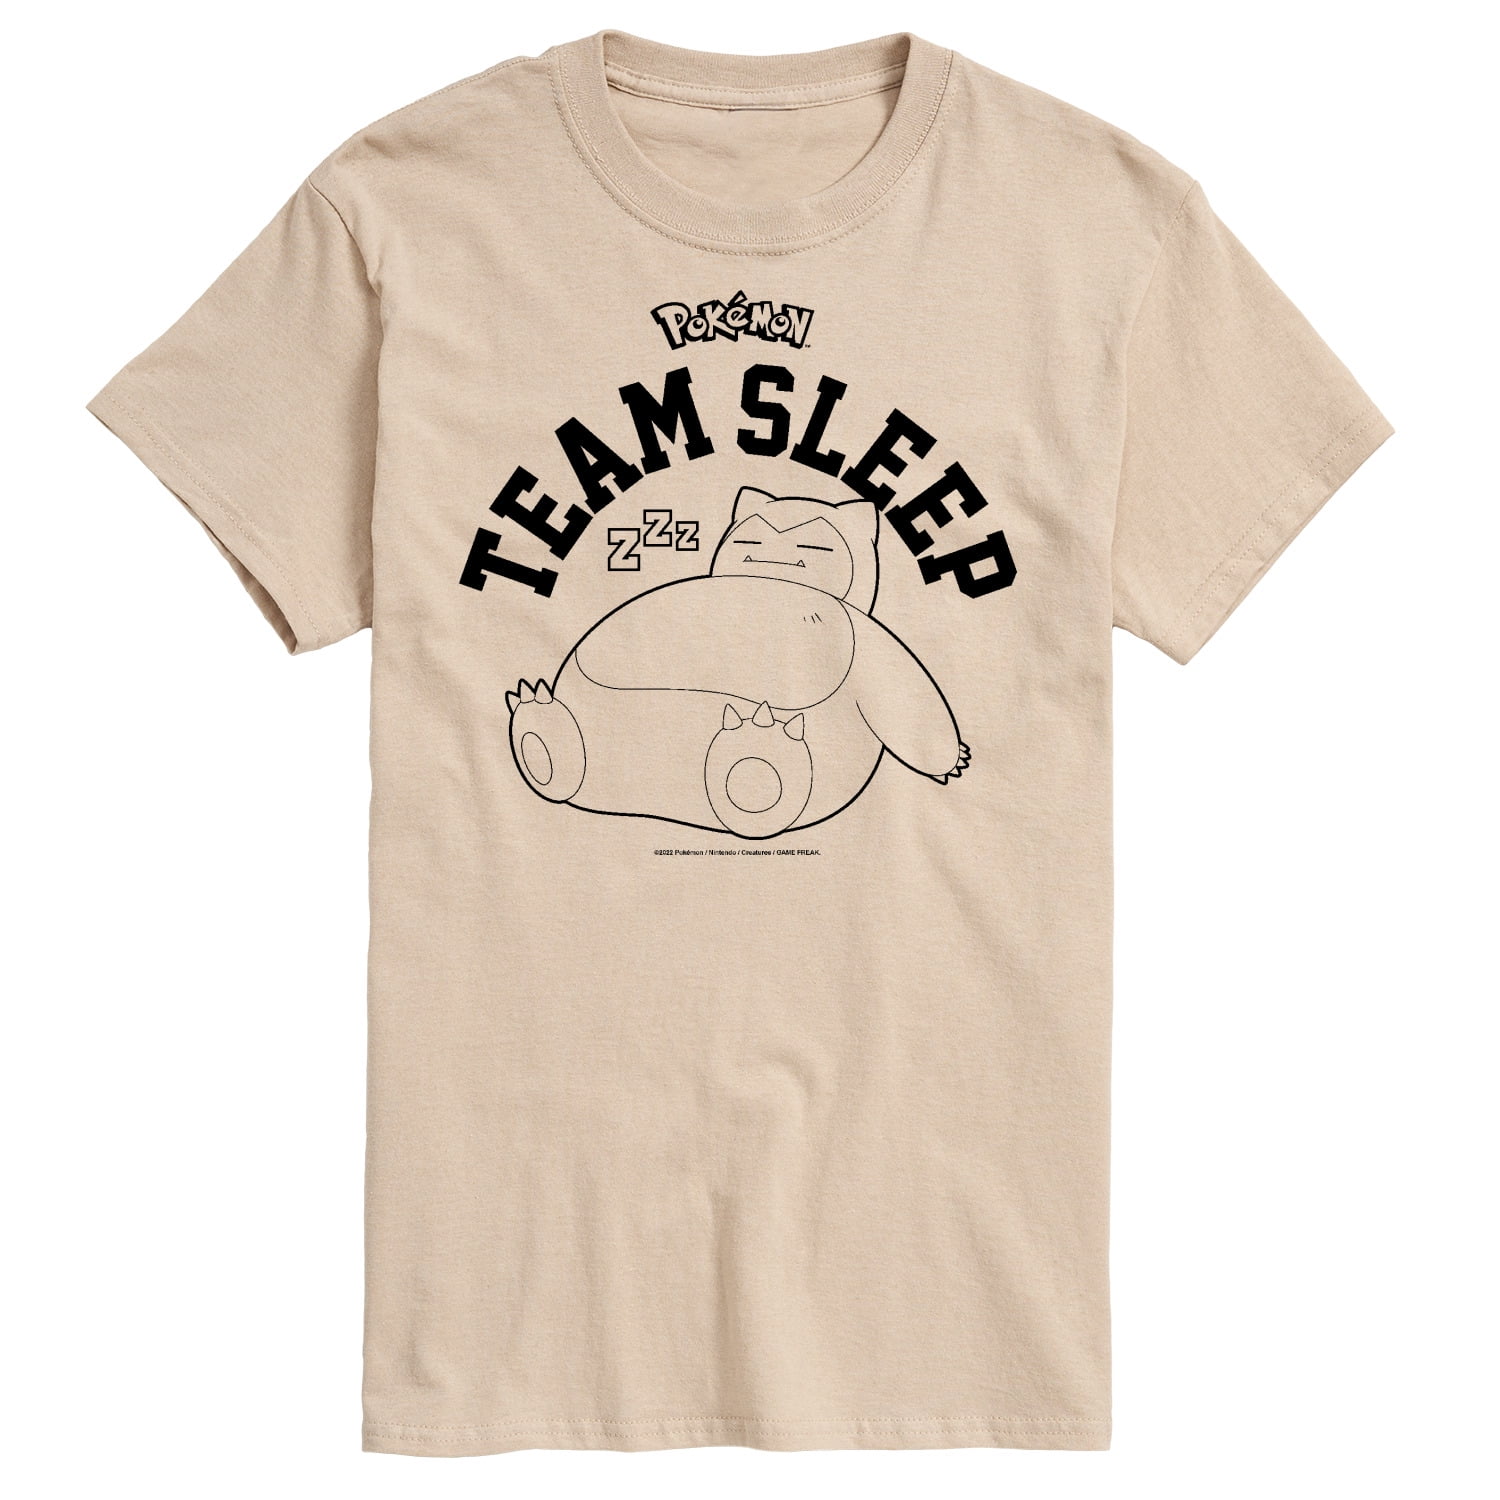 Pokémon - Snorlax Team Sleep - Men's Short Sleeve Graphic T-Shirt